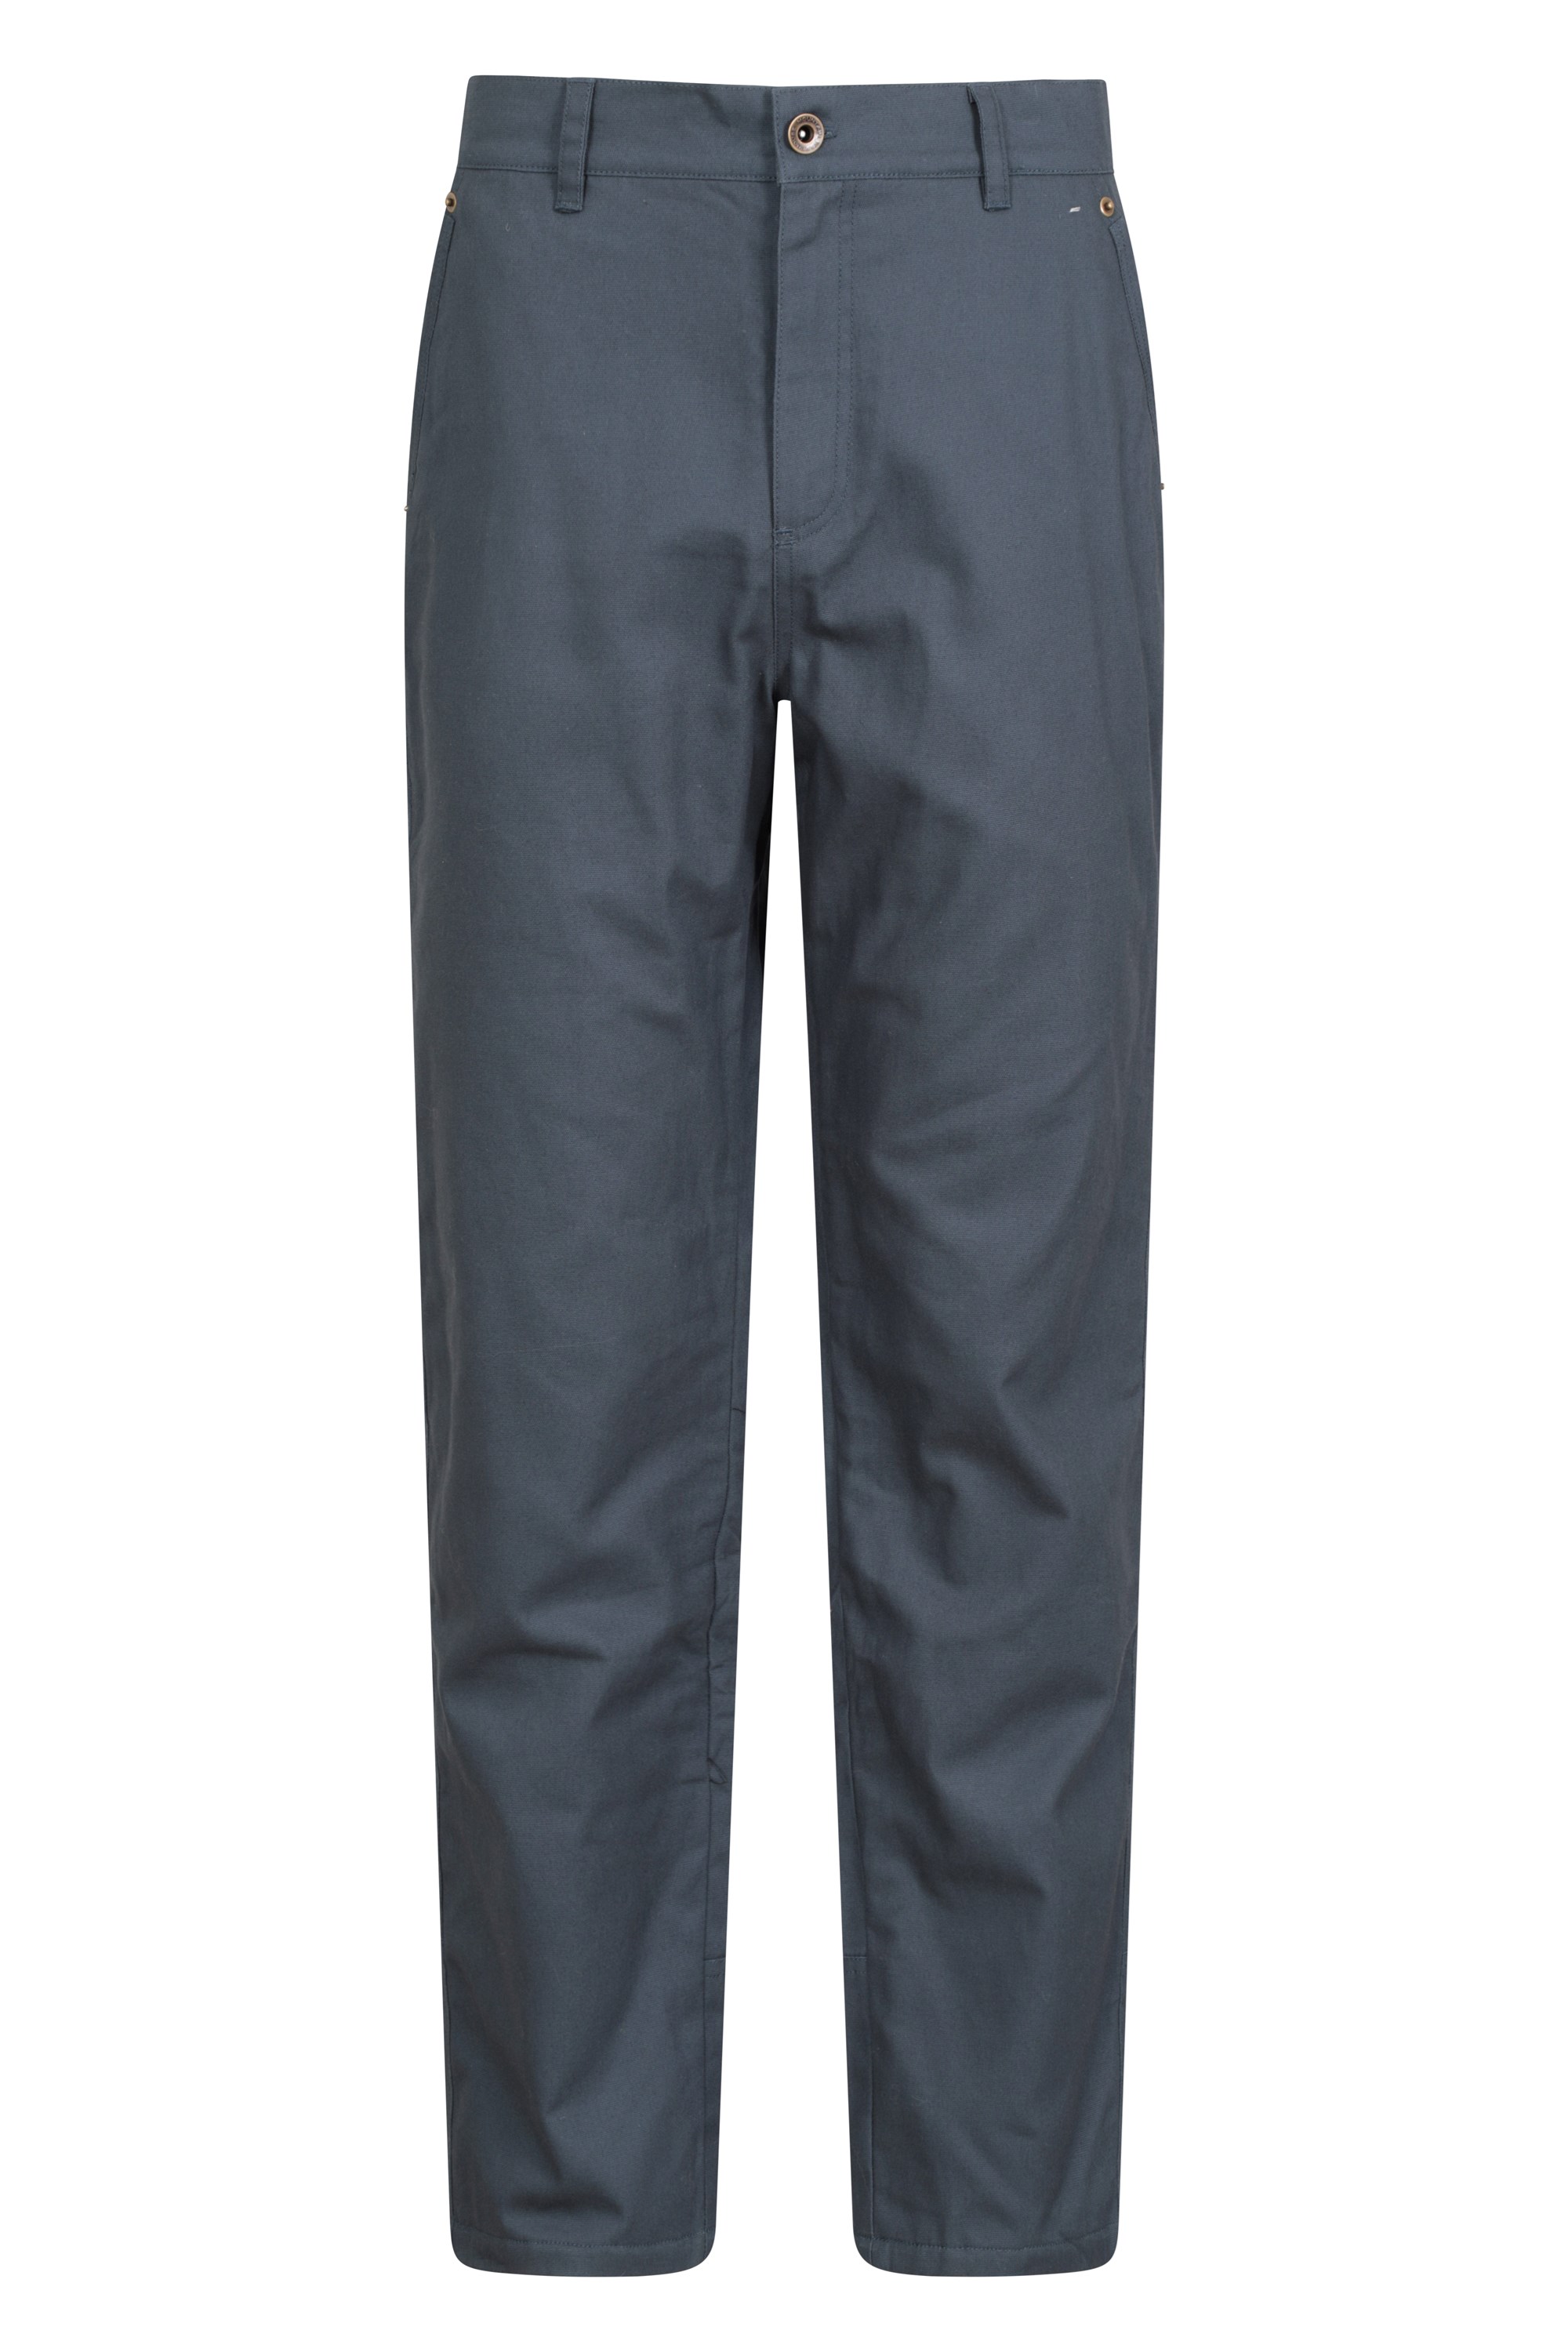 GERMAN ARMY GORETEX thermal fleece waterproof trousers cold weather Work  Pants £39.99 - PicClick UK